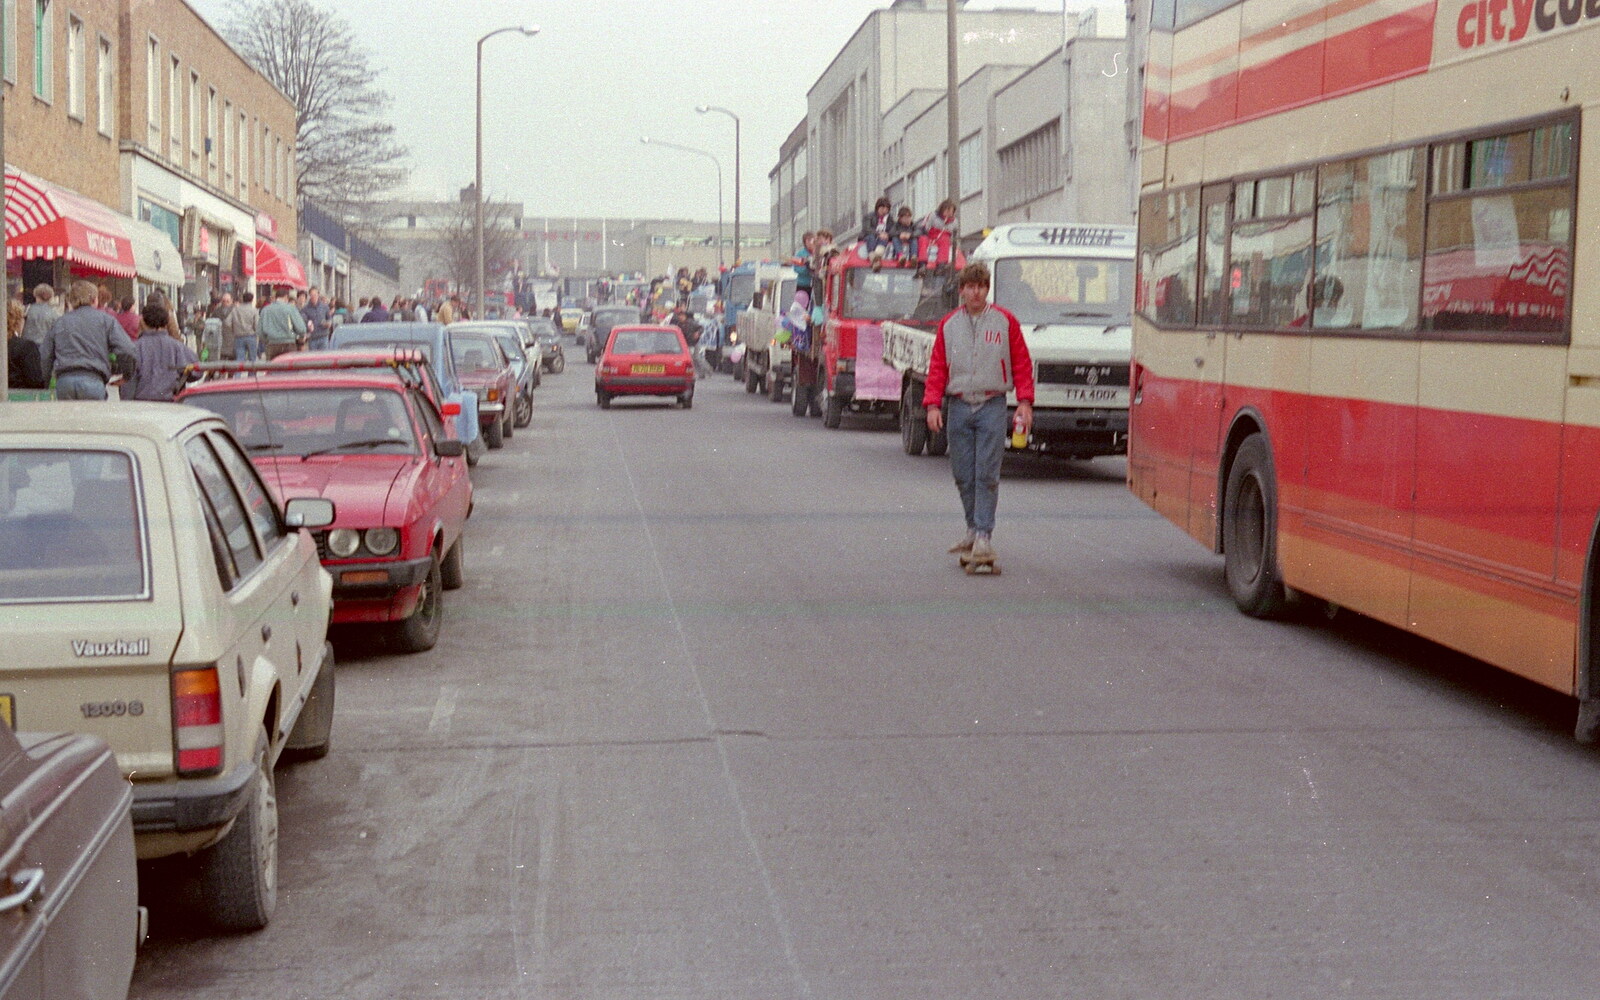 Skateboarding down Cornwall Street from Uni: PPSU "Jazz" RAG Street Parade, Plymouth, Devon - 17th February 1986